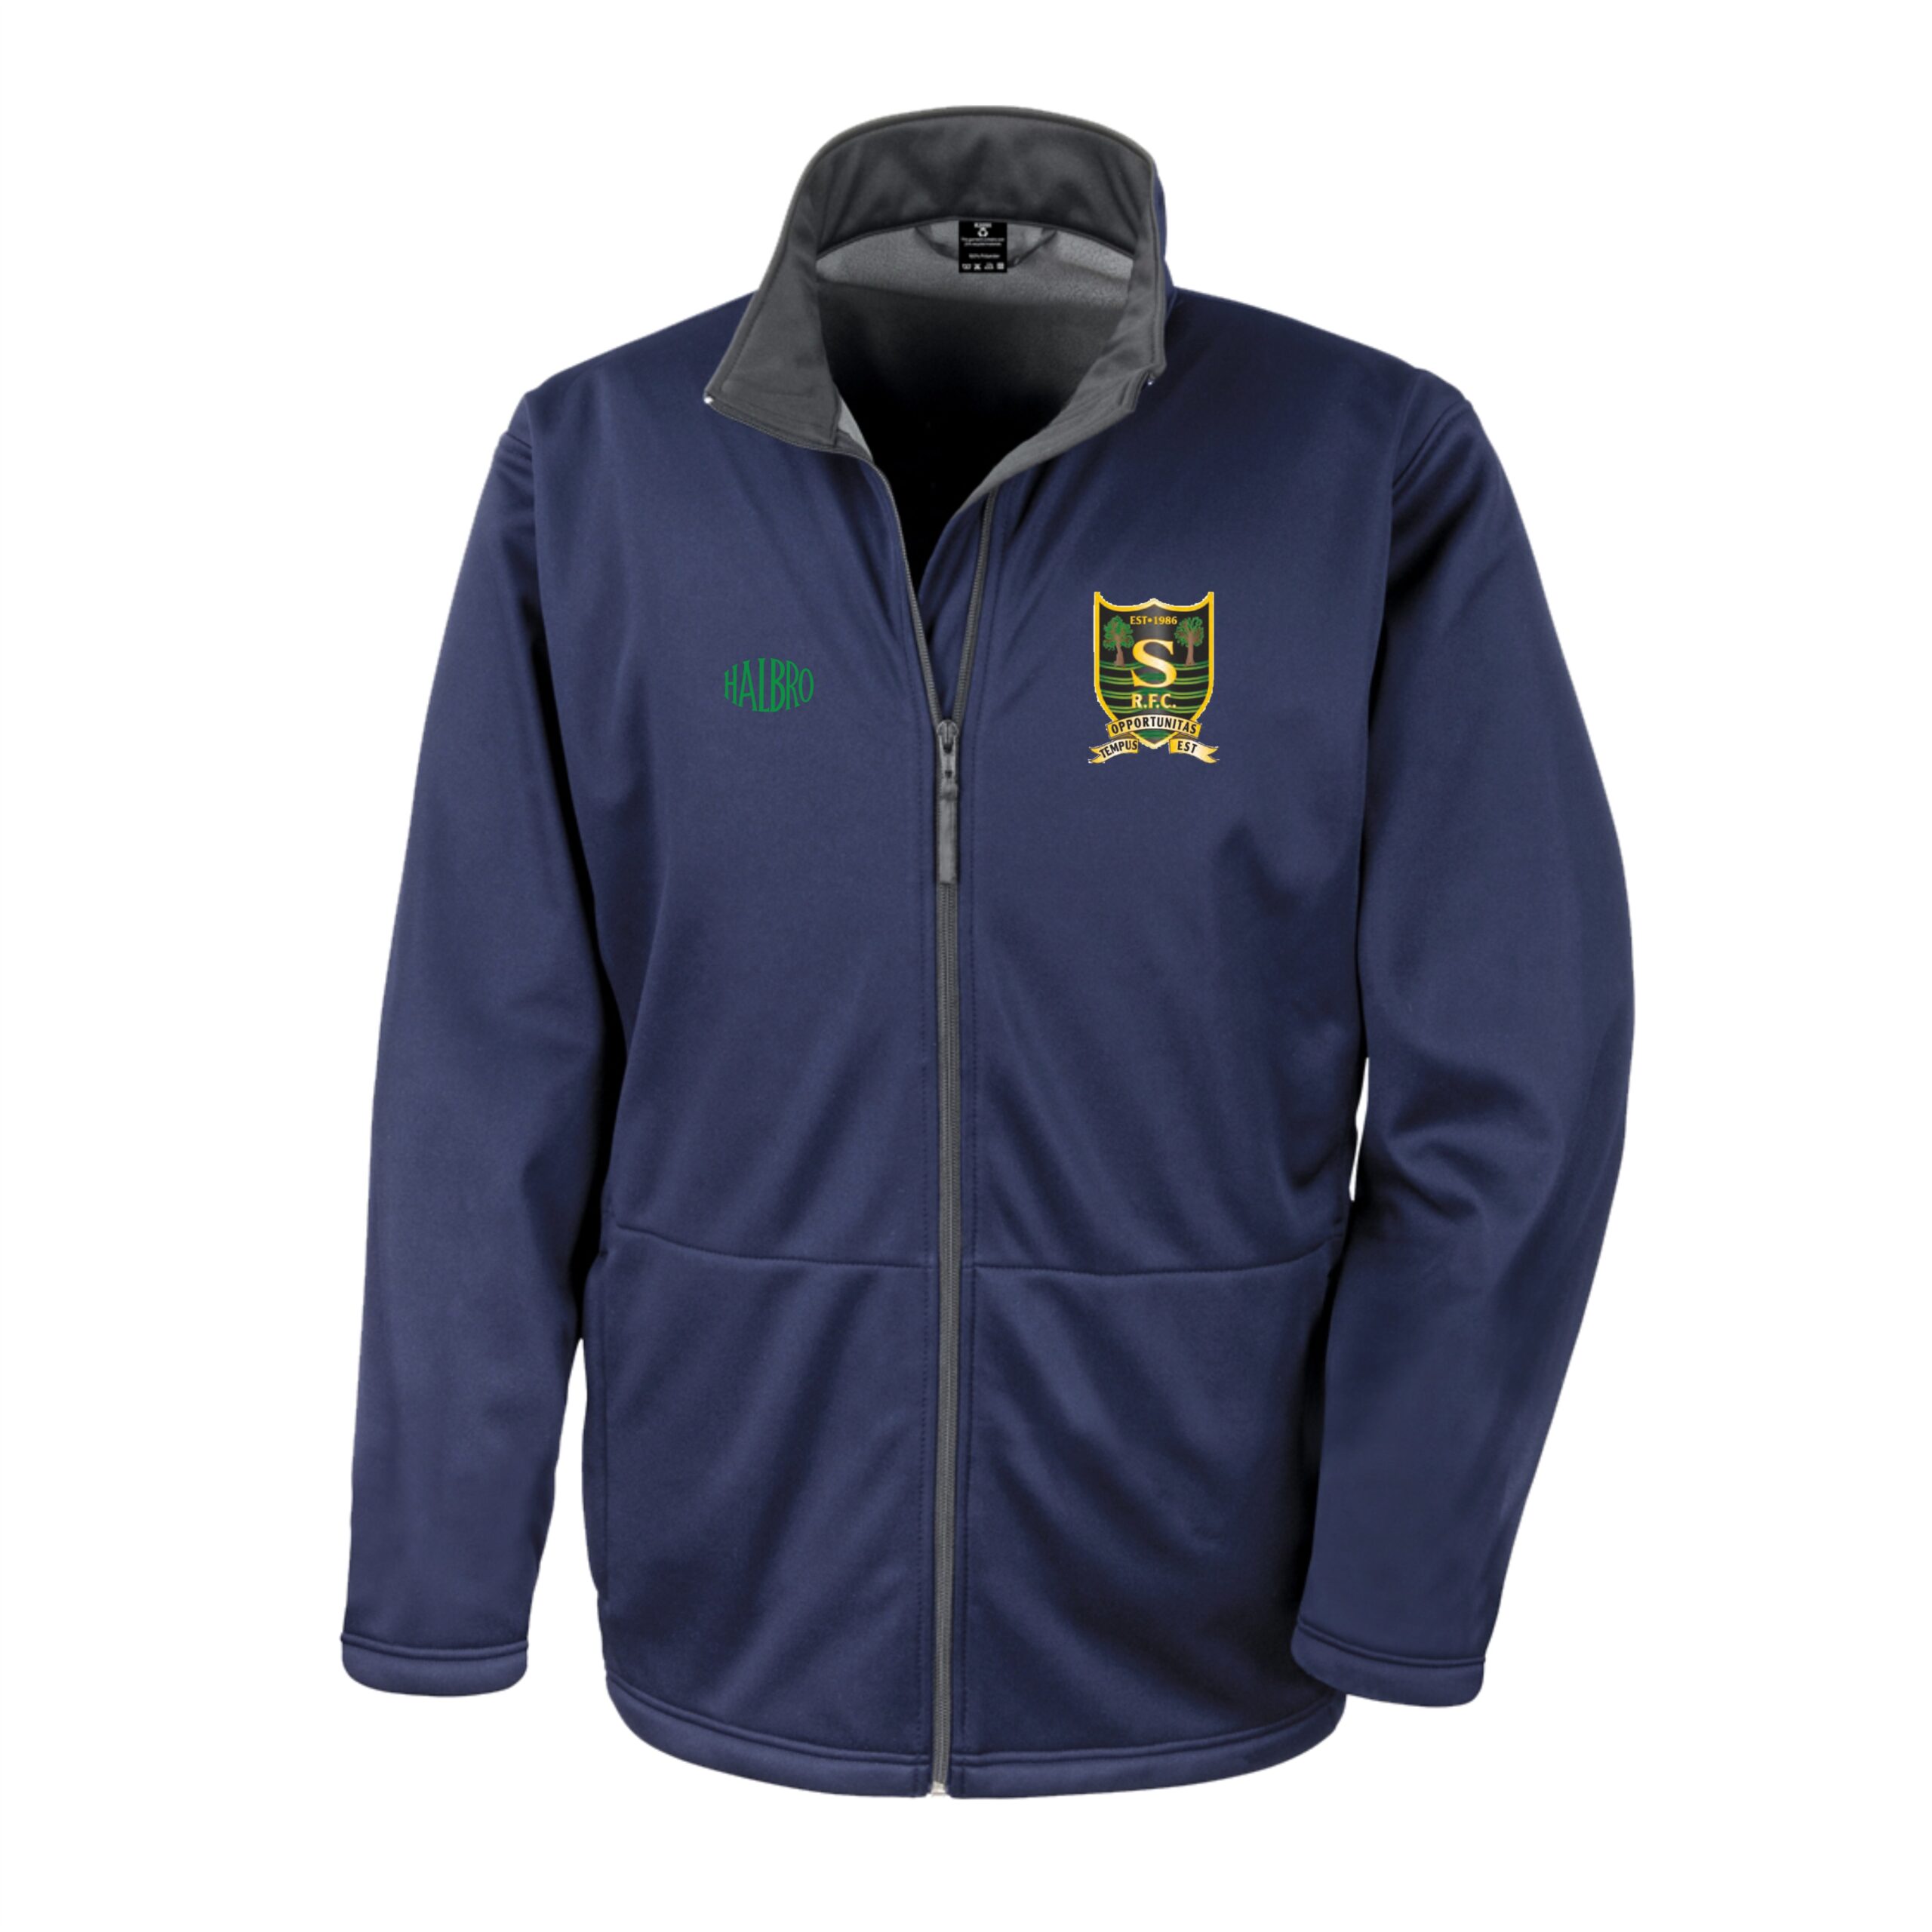 Southmead RFC Seniors Softshell Jacket - Halbro Sportswear Limited